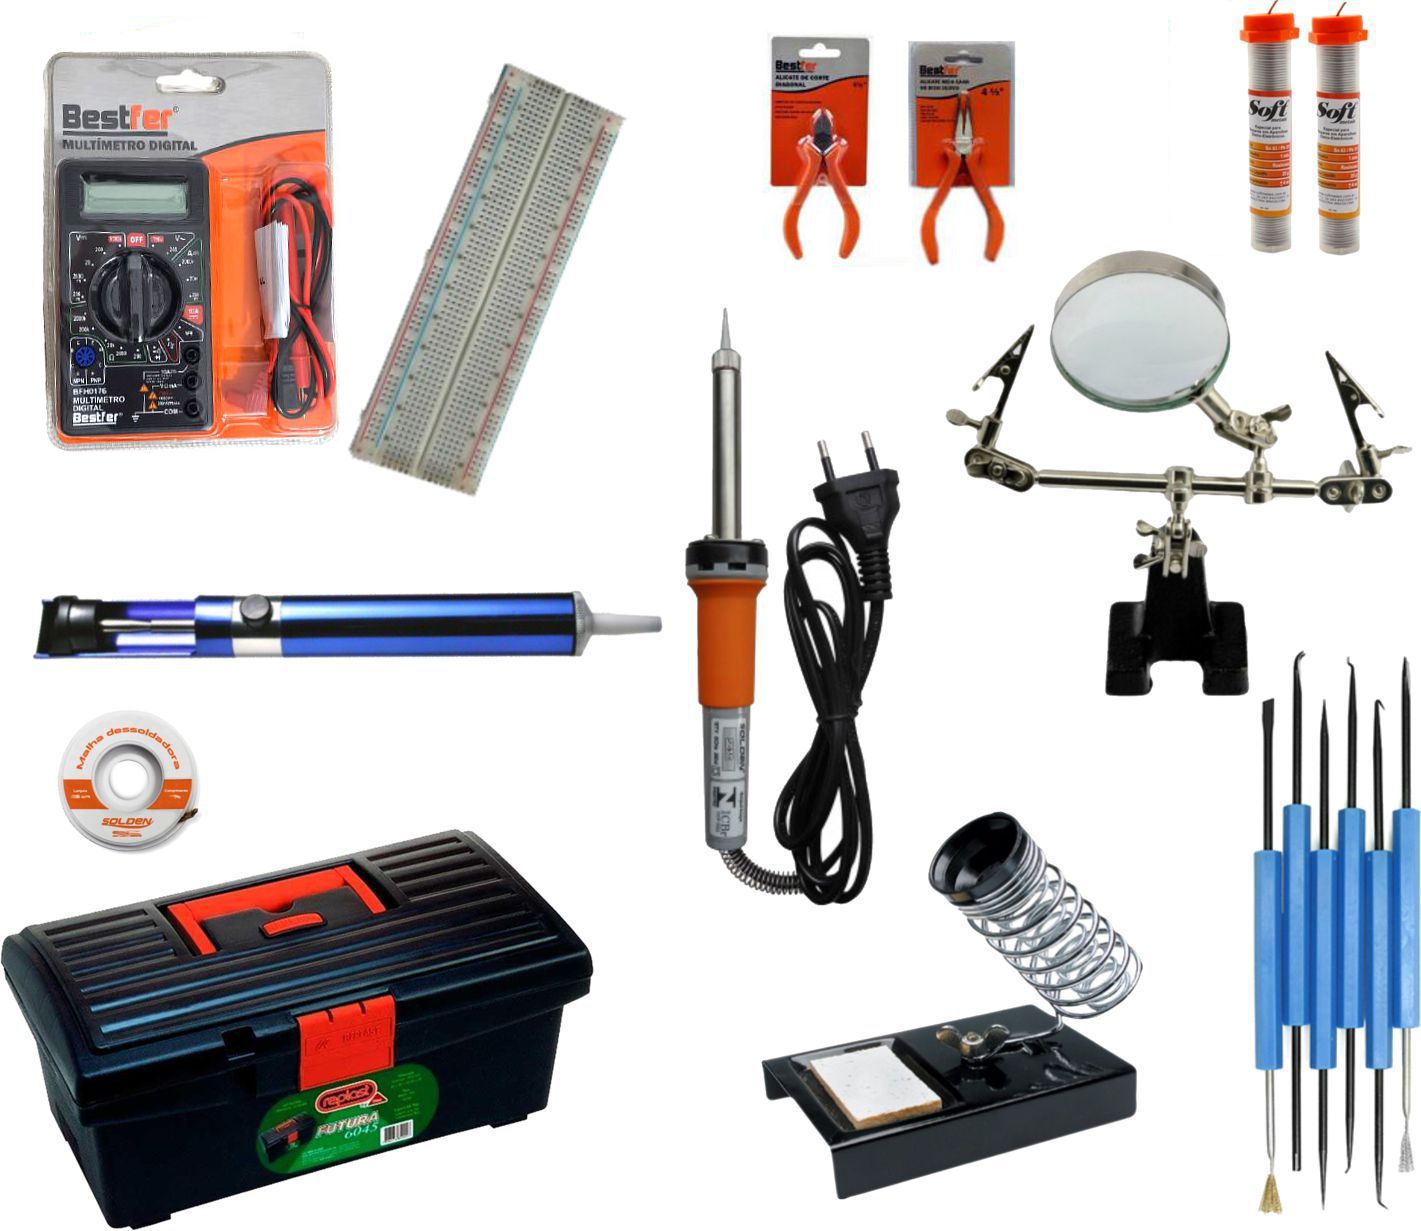 RL009 - Kit de Ferramentas para Eletrônica com Multímetro, Proto Board, ferro de solda, lupa, ....